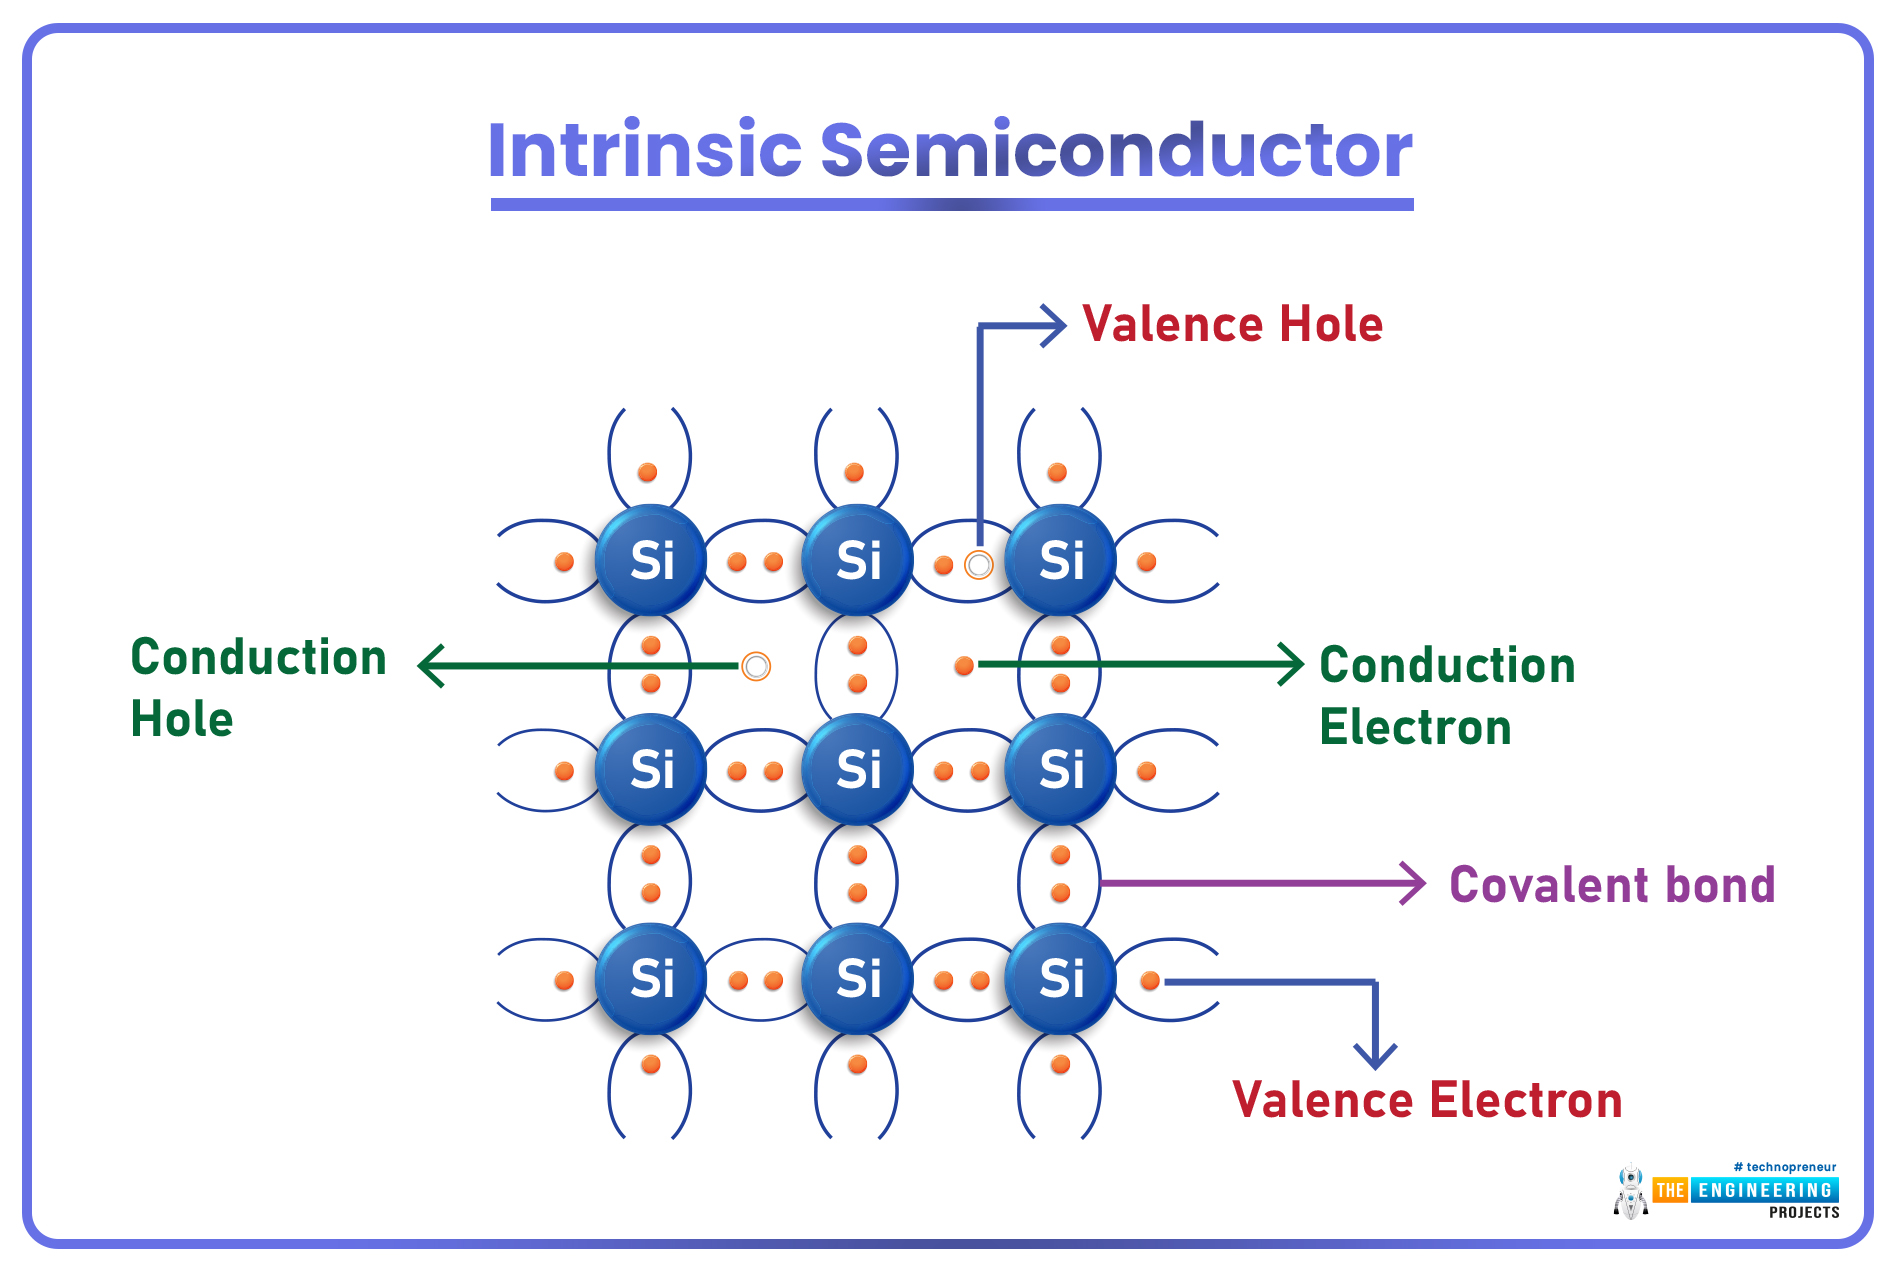 Intrinsic Semiconductor, Intrinsic Semiconductor structure, Intrinsic Semiconductor bonding, extrinsic semiconductor